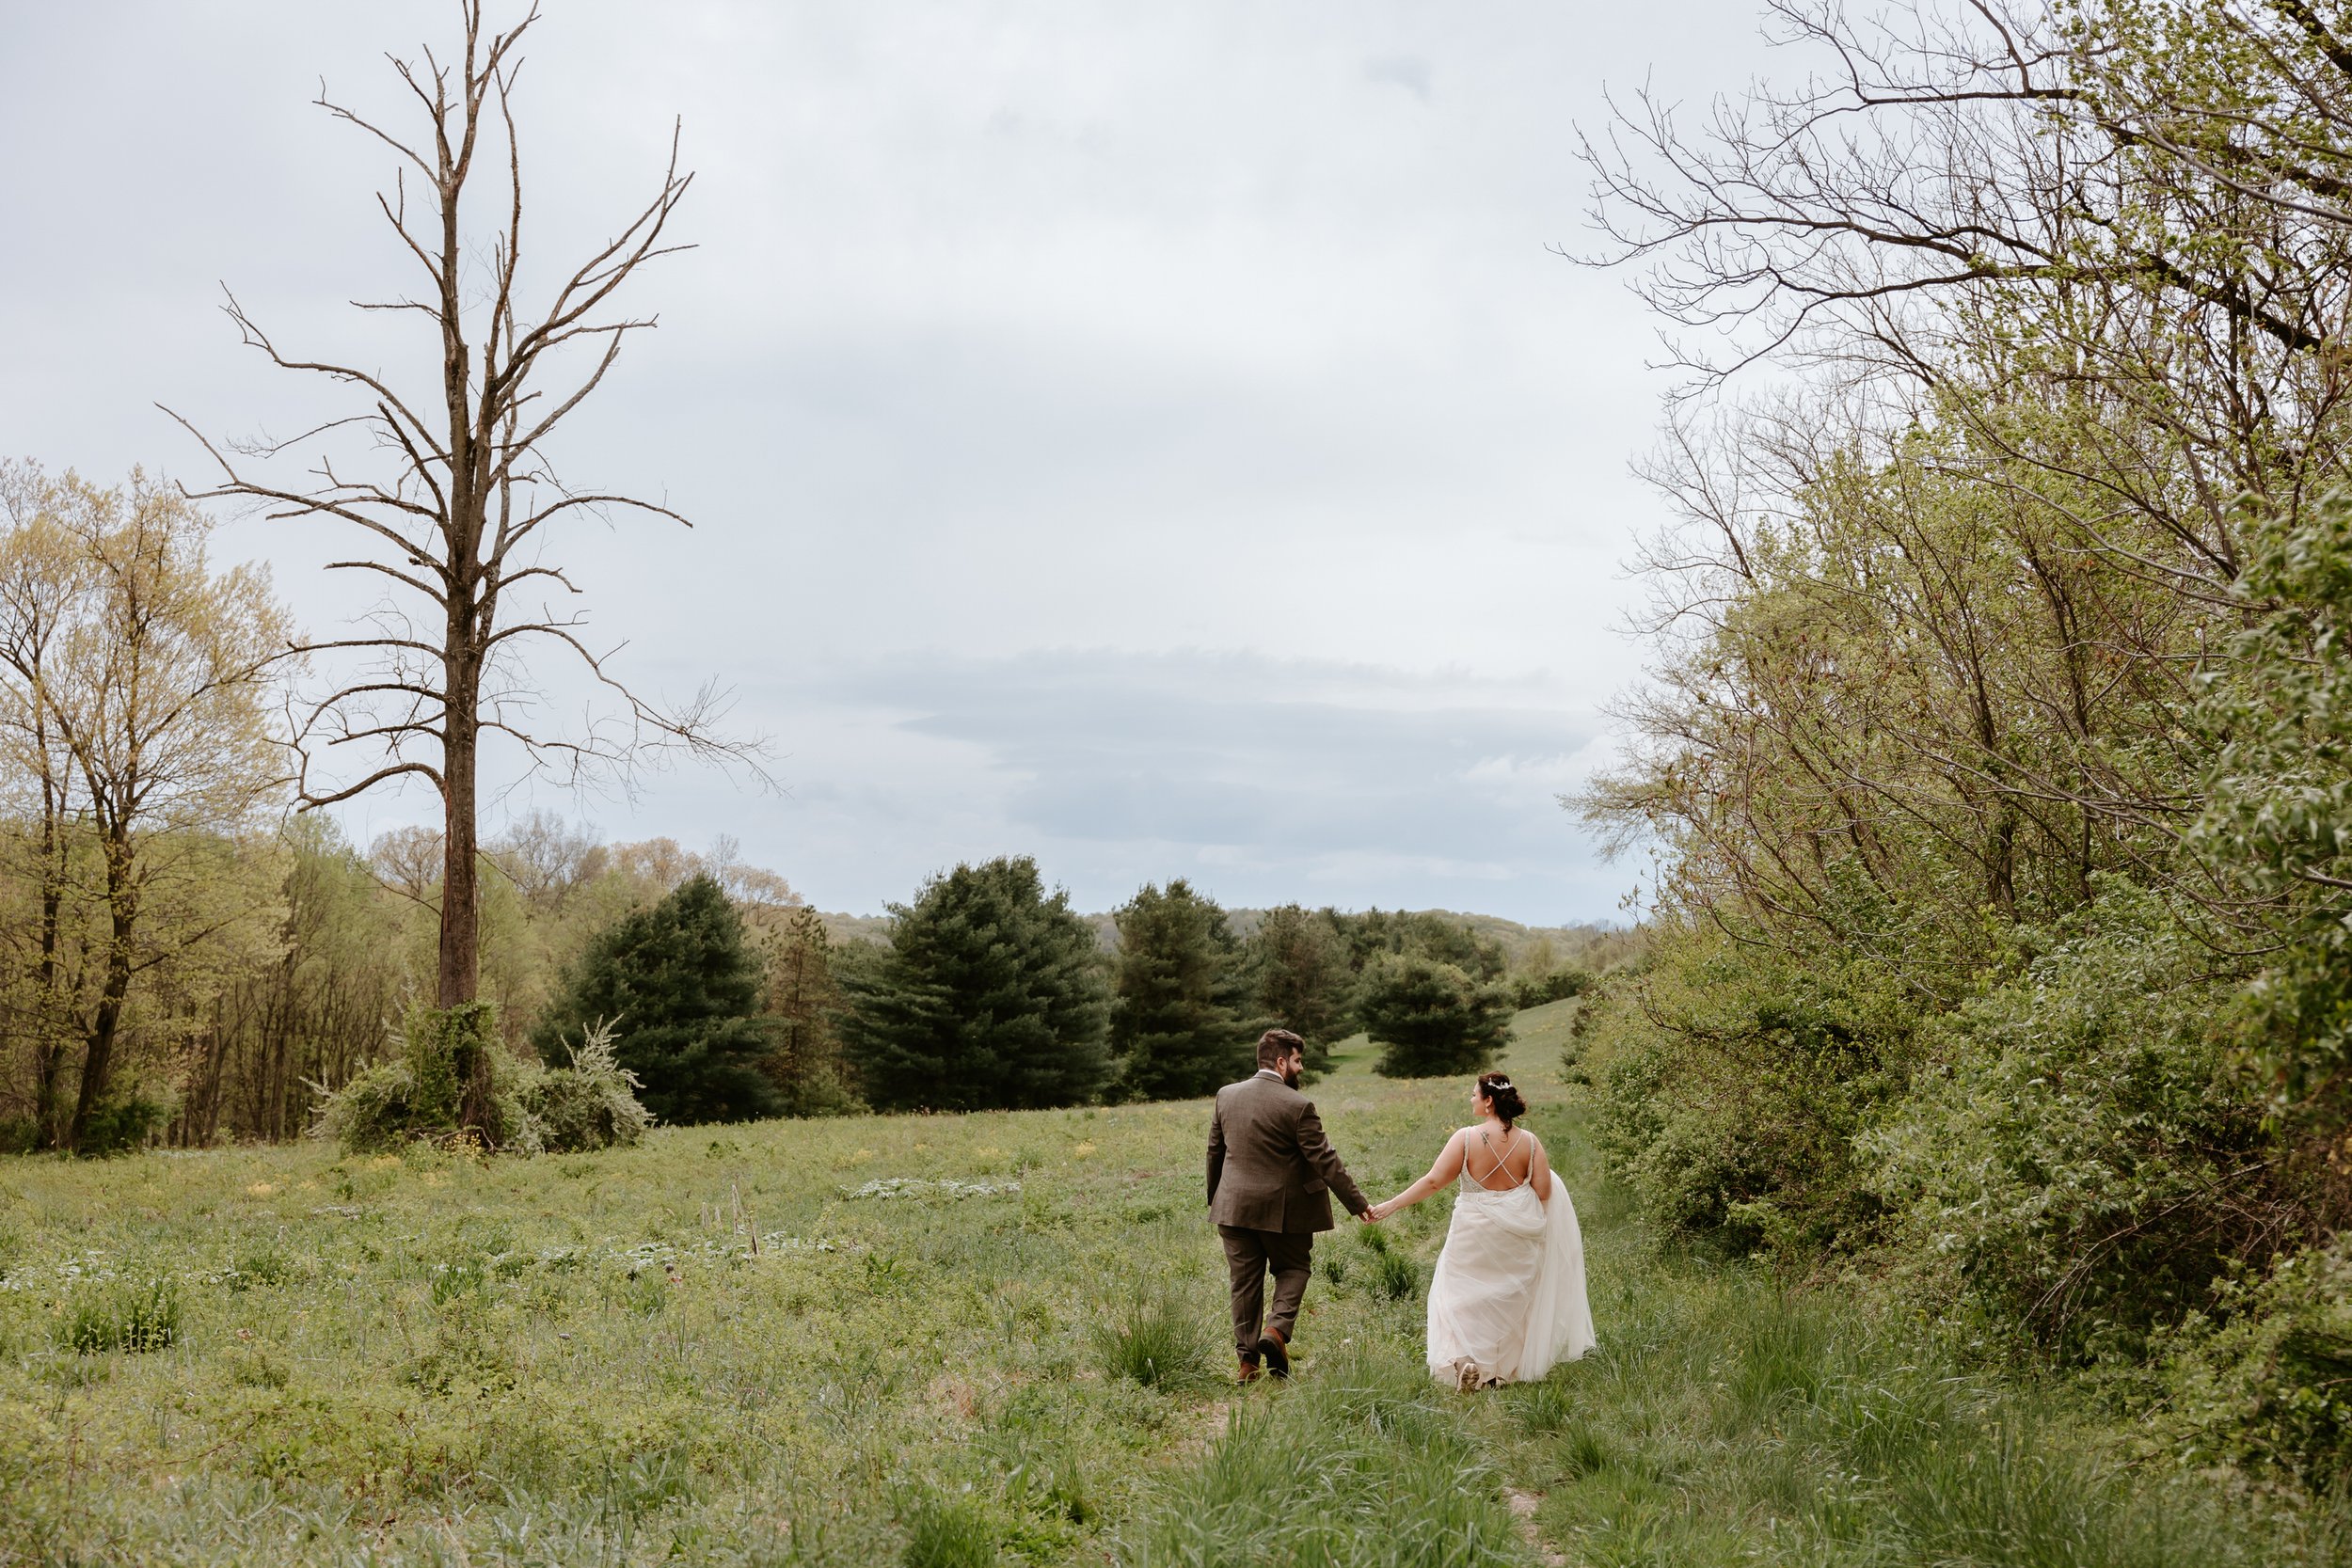 Groom and bride walk holding hands in open green field. 